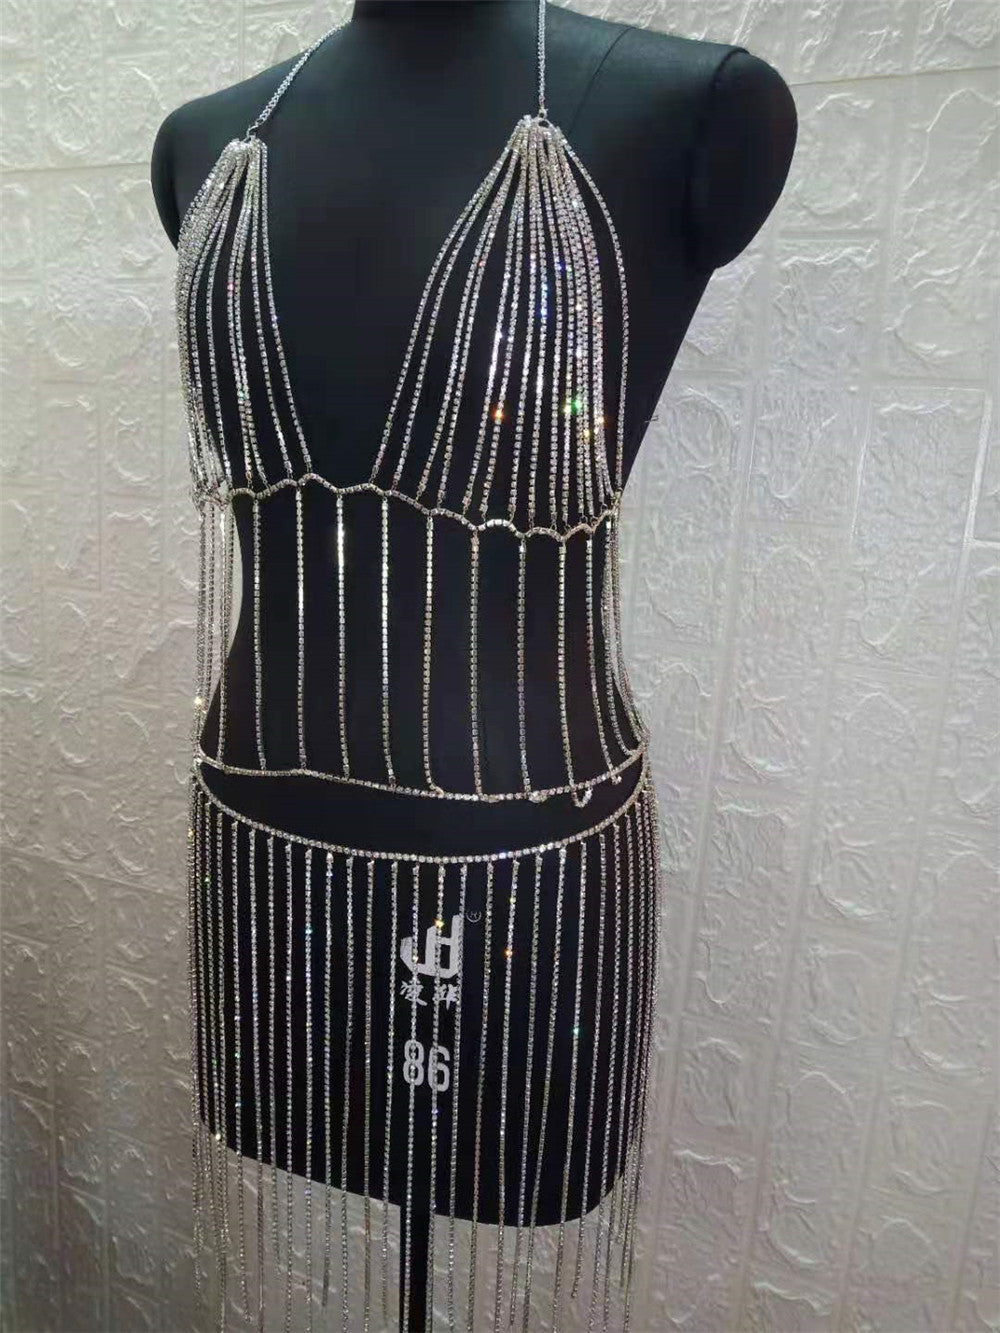 Rhinestone Belly Dress Body Chain auggust-store.myshopify.com Body Chains Auggust Store